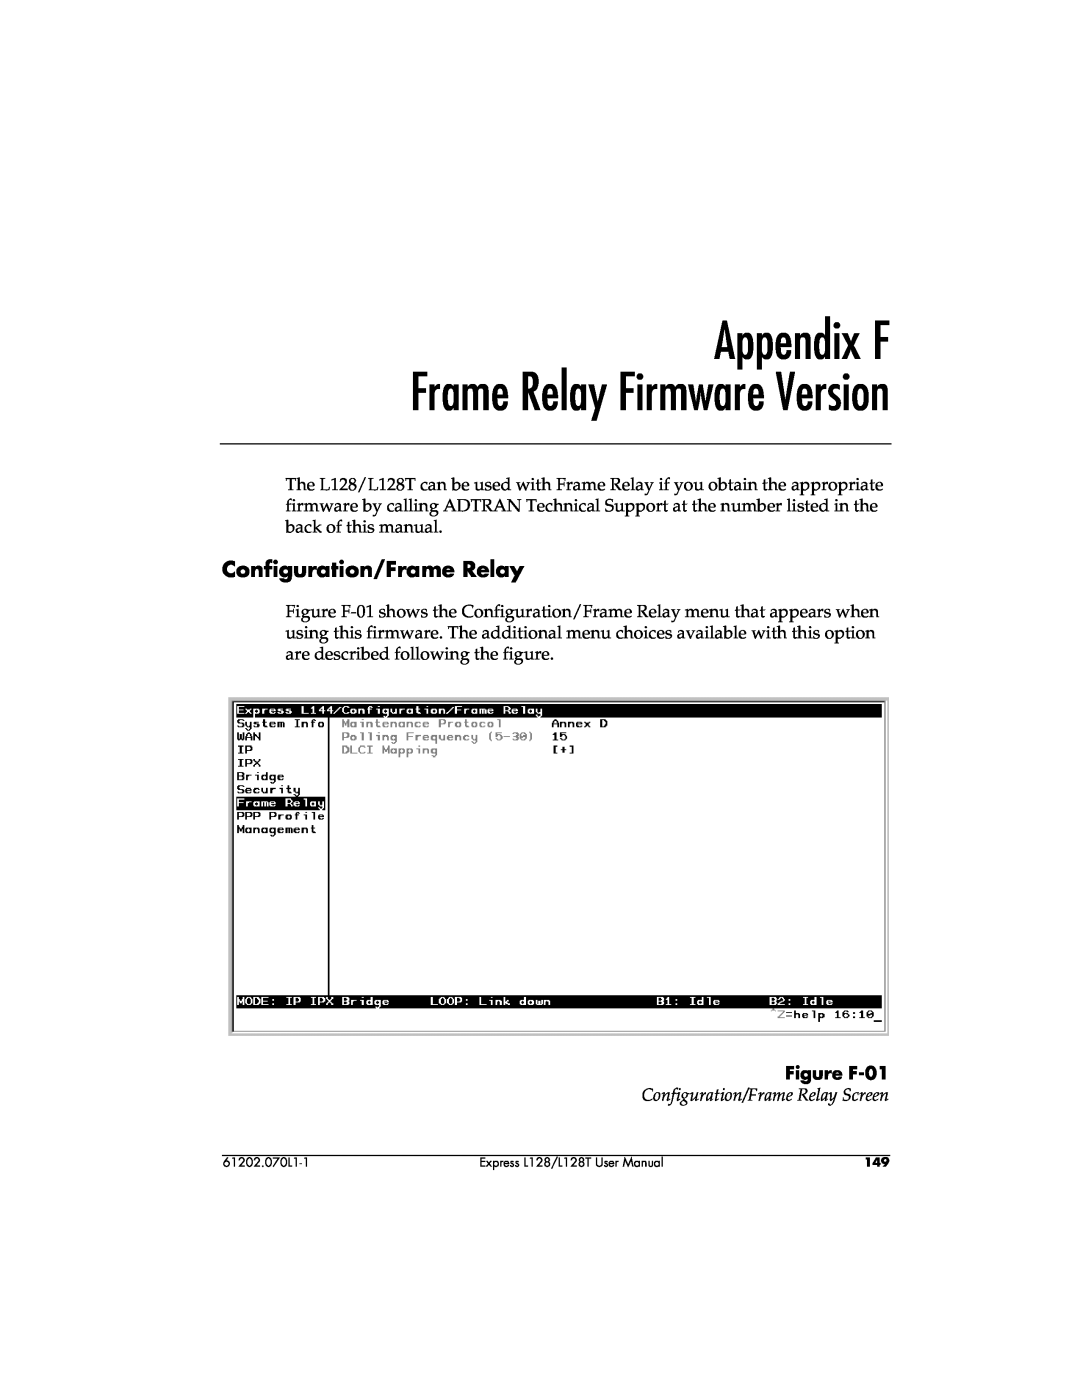 ADTRAN L128T user manual Appendix F Frame Relay Firmware Version, Configuration/Frame Relay, Figure F-01 